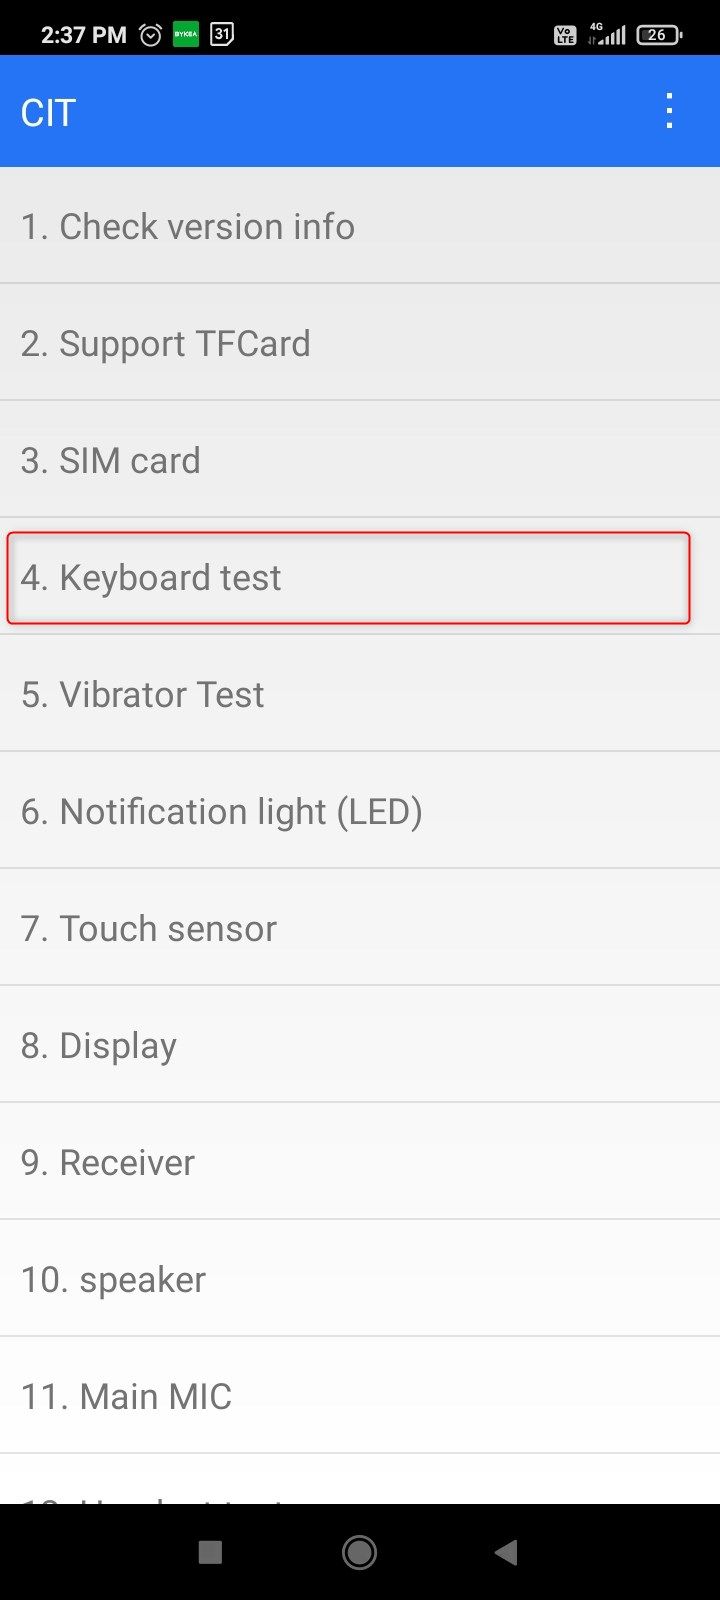 Keyboard test menu item in the CIT tools.